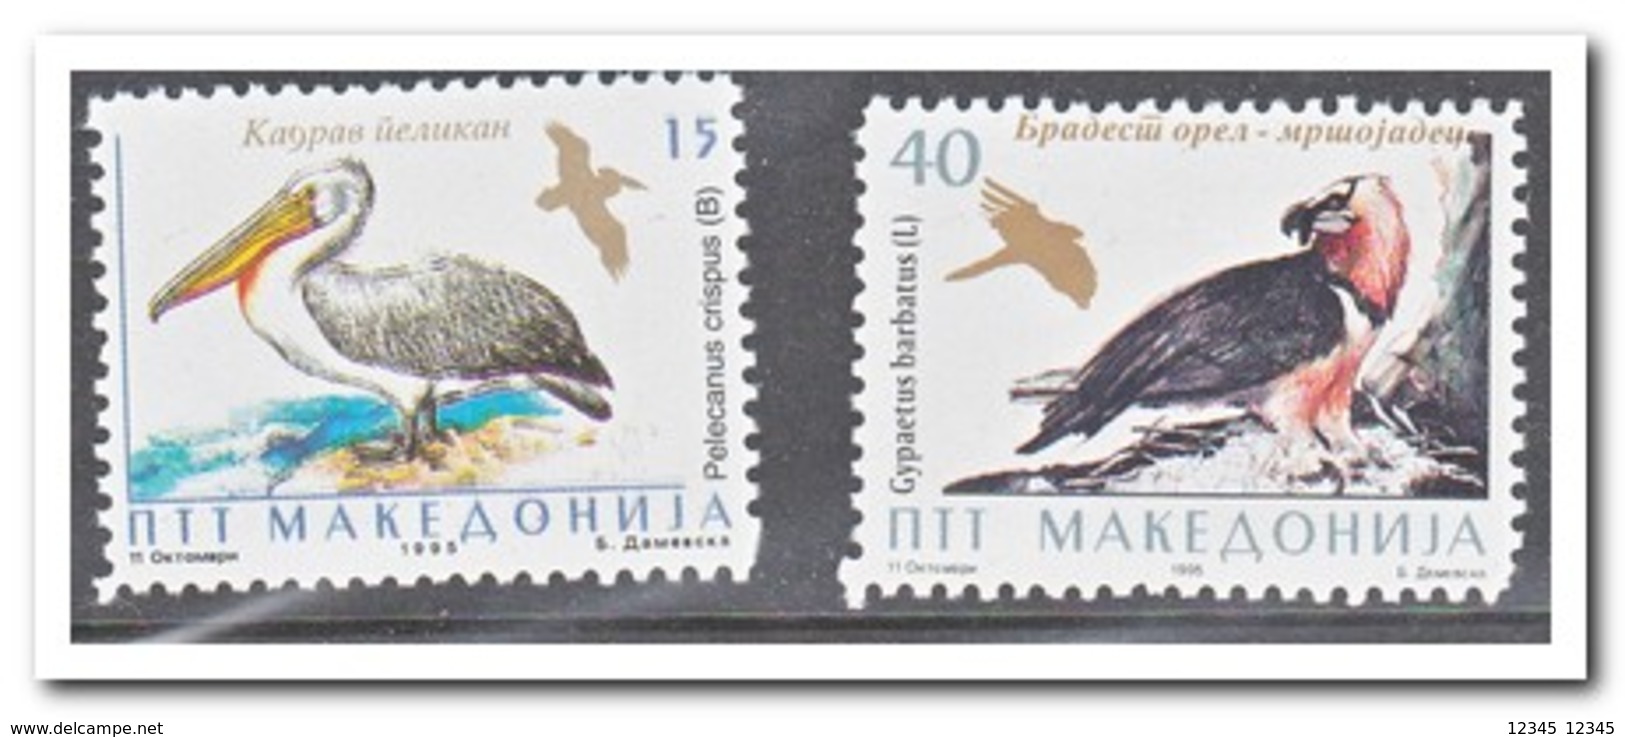 Macedonië 1995, Postfris MNH, Birds - Noord-Macedonië